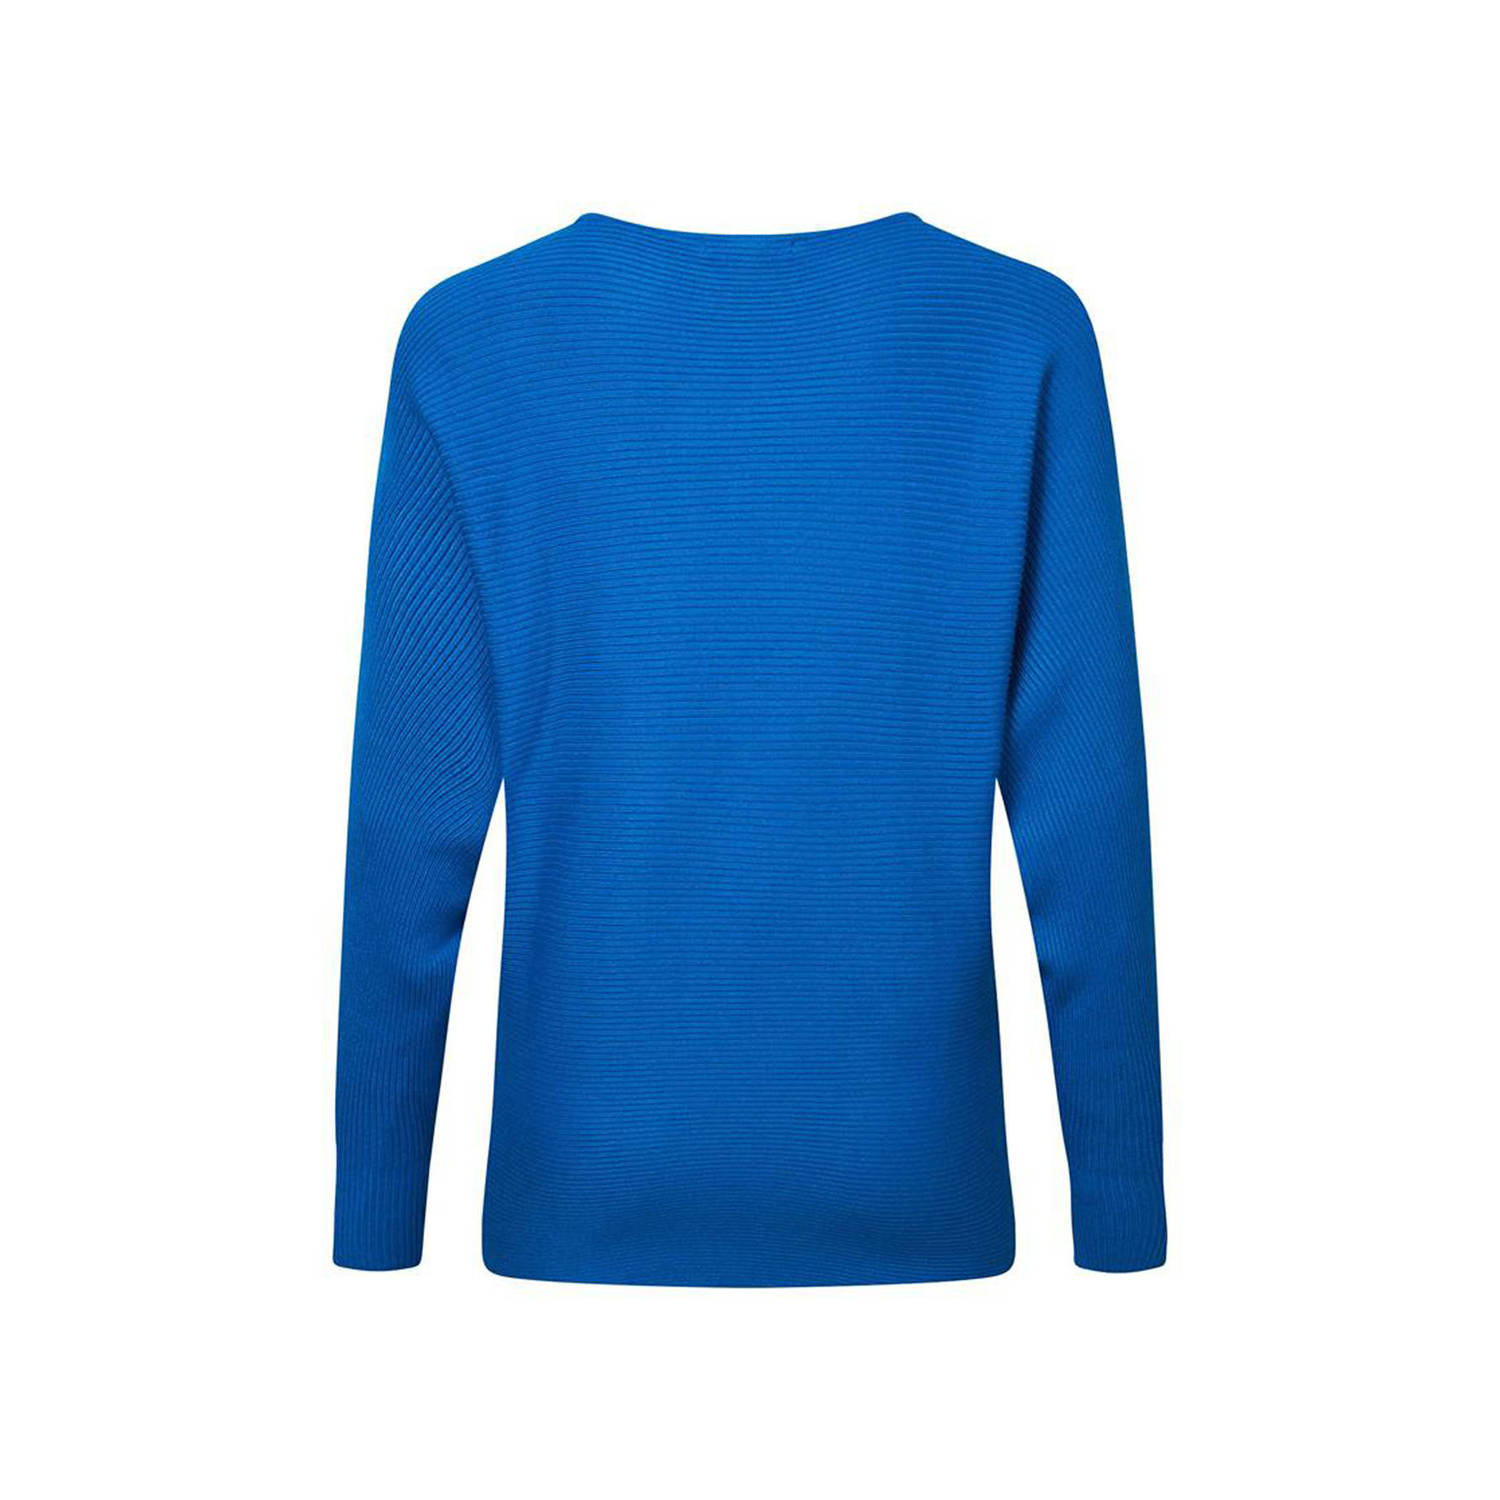 Miss Etam Regulier trui Letizia rib sweater blauw